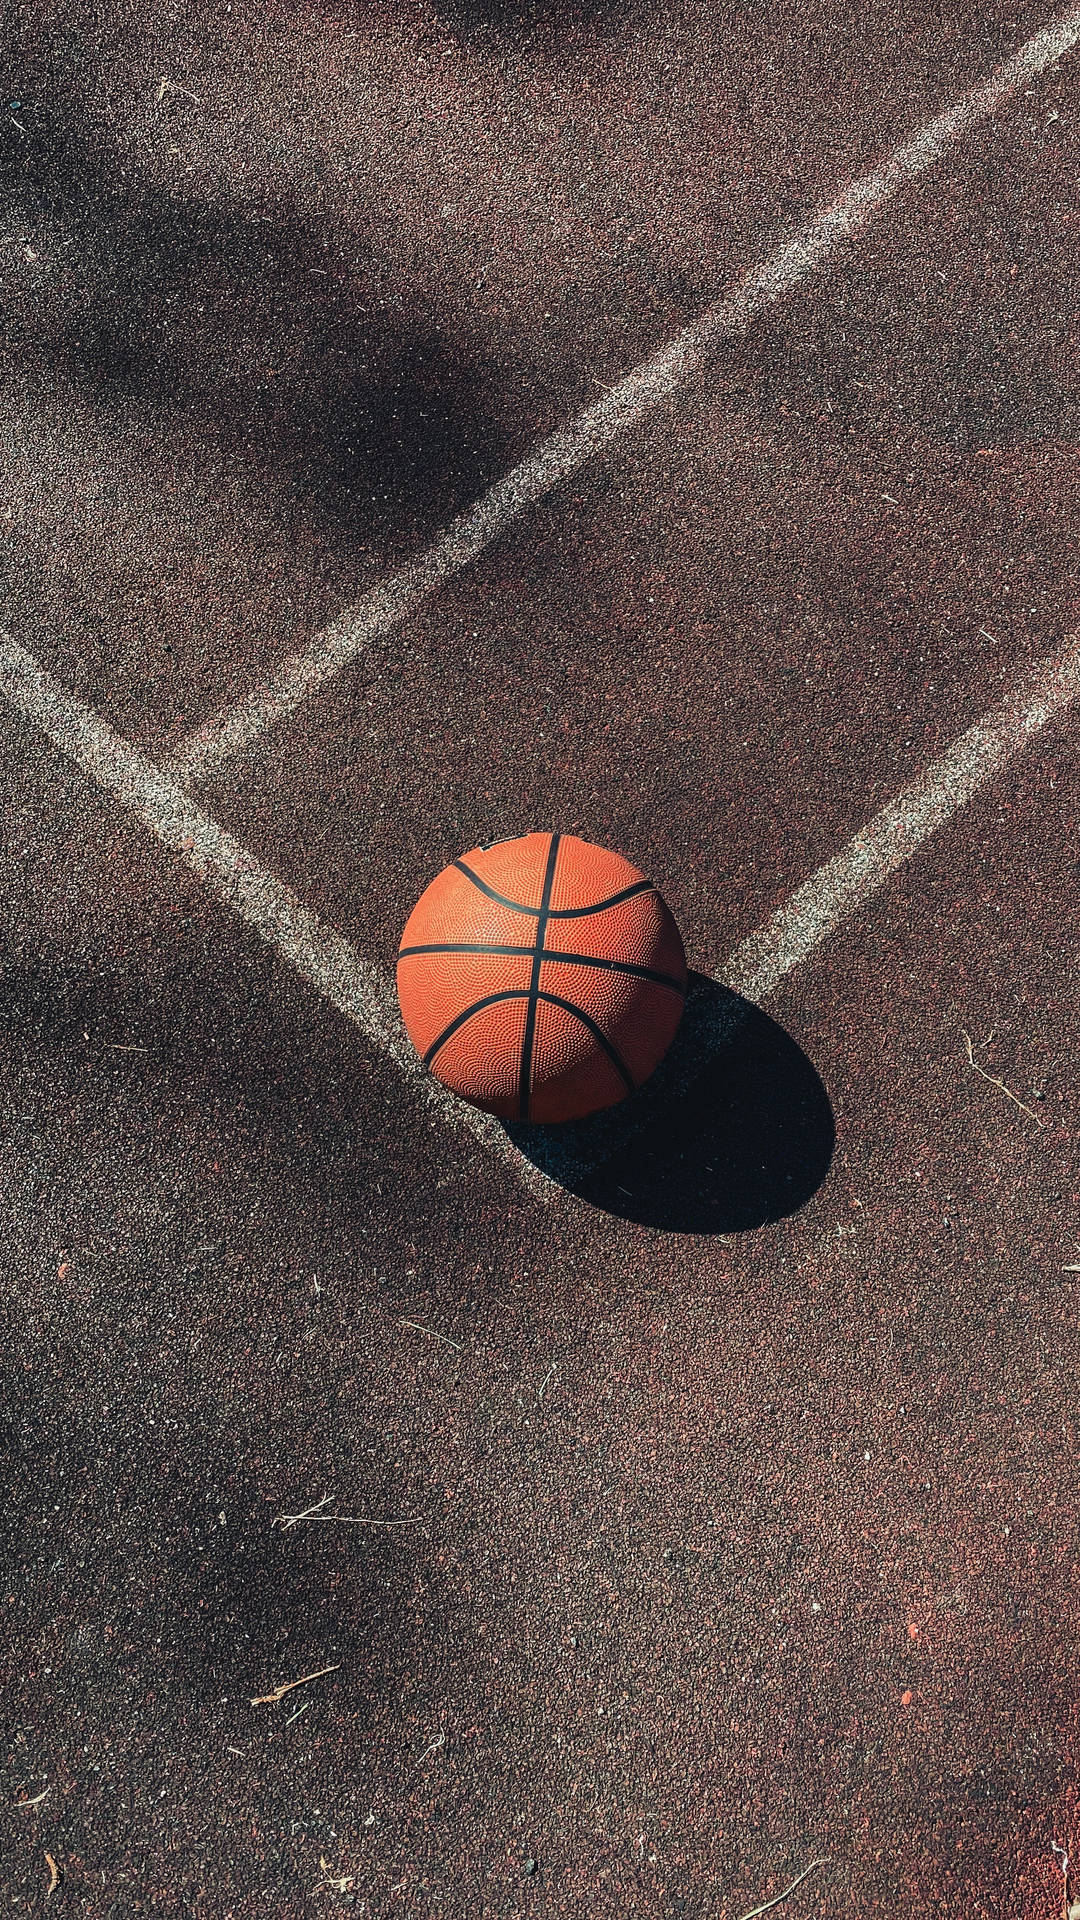 Ball on Concrete Basketball Court Wallpaper